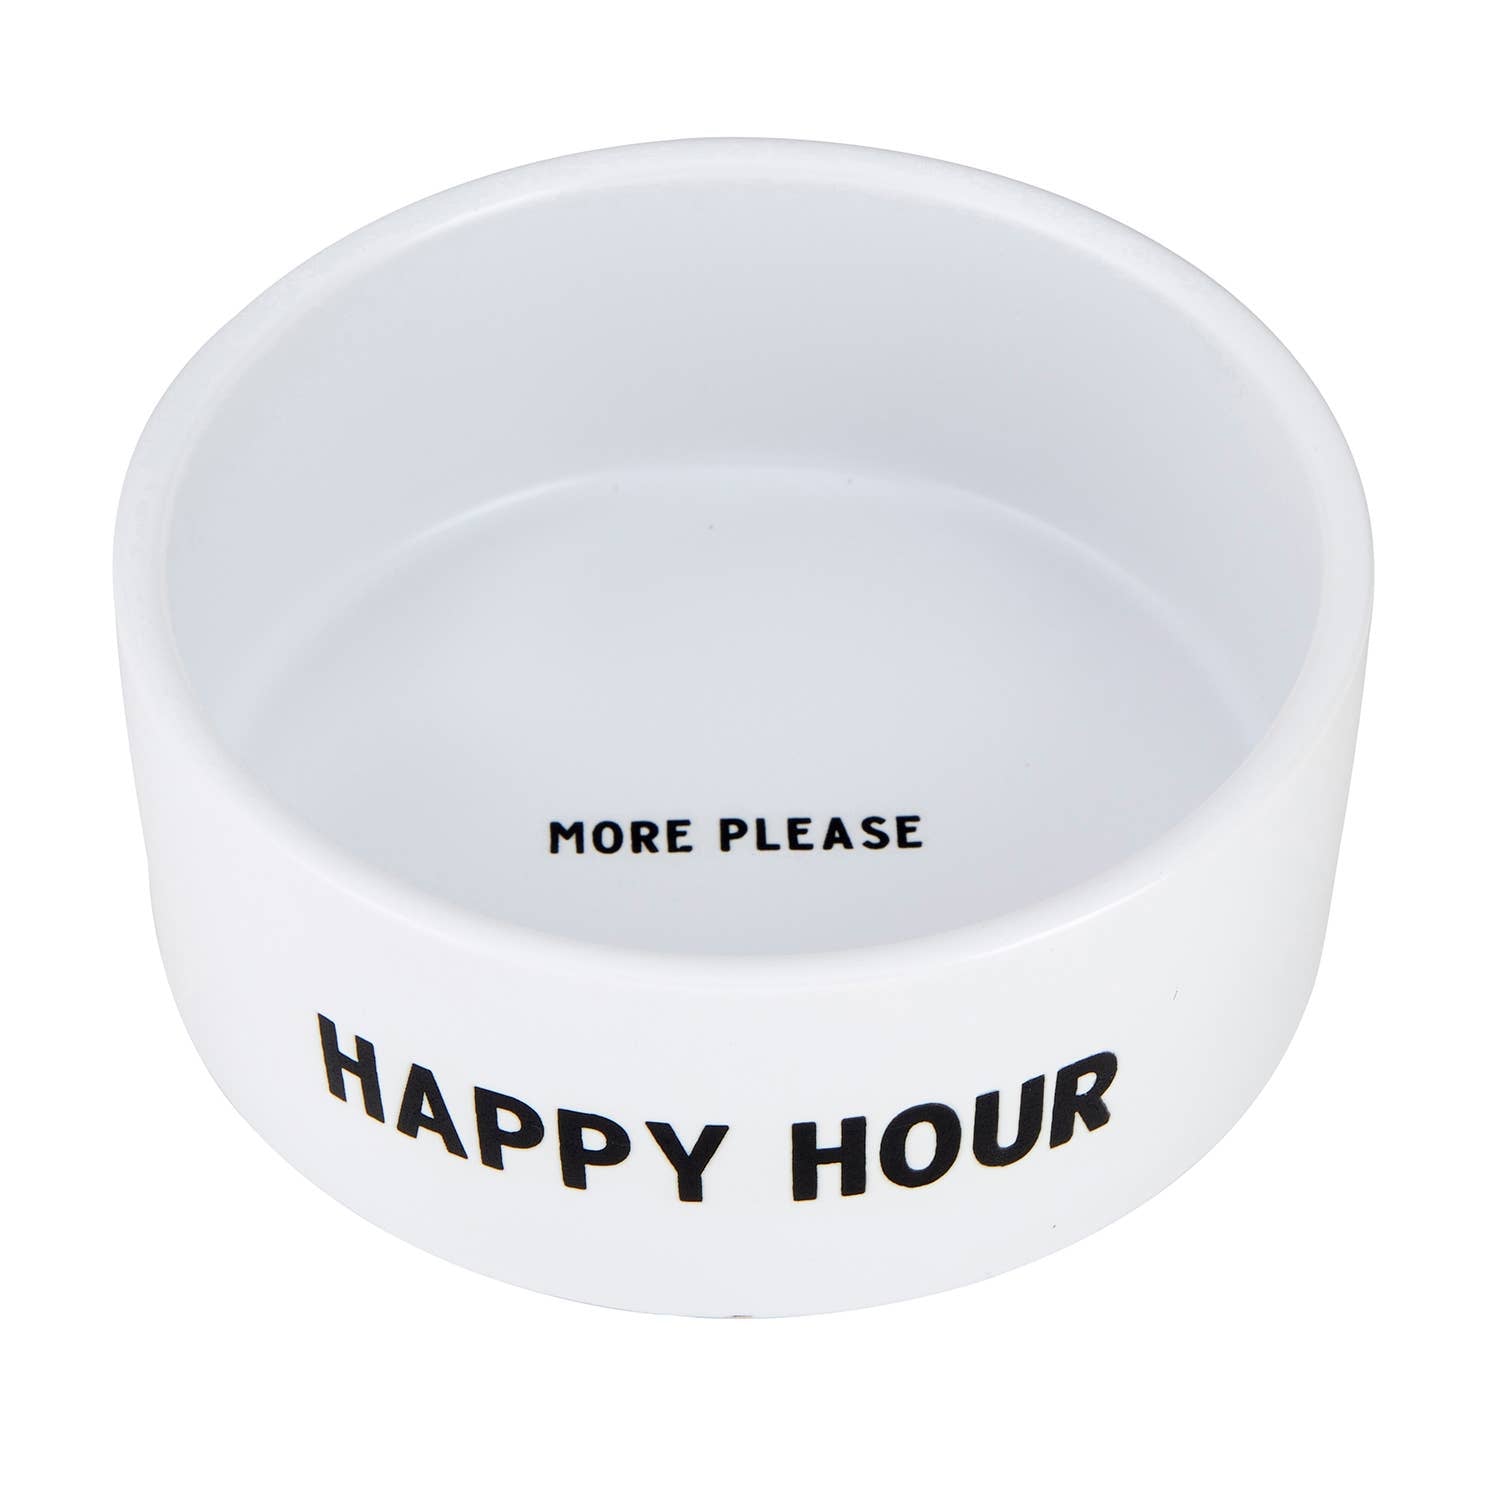 Santa Barbara Design Studio by Creative Brands - Ceramic Pet Bowl - Happy Hour